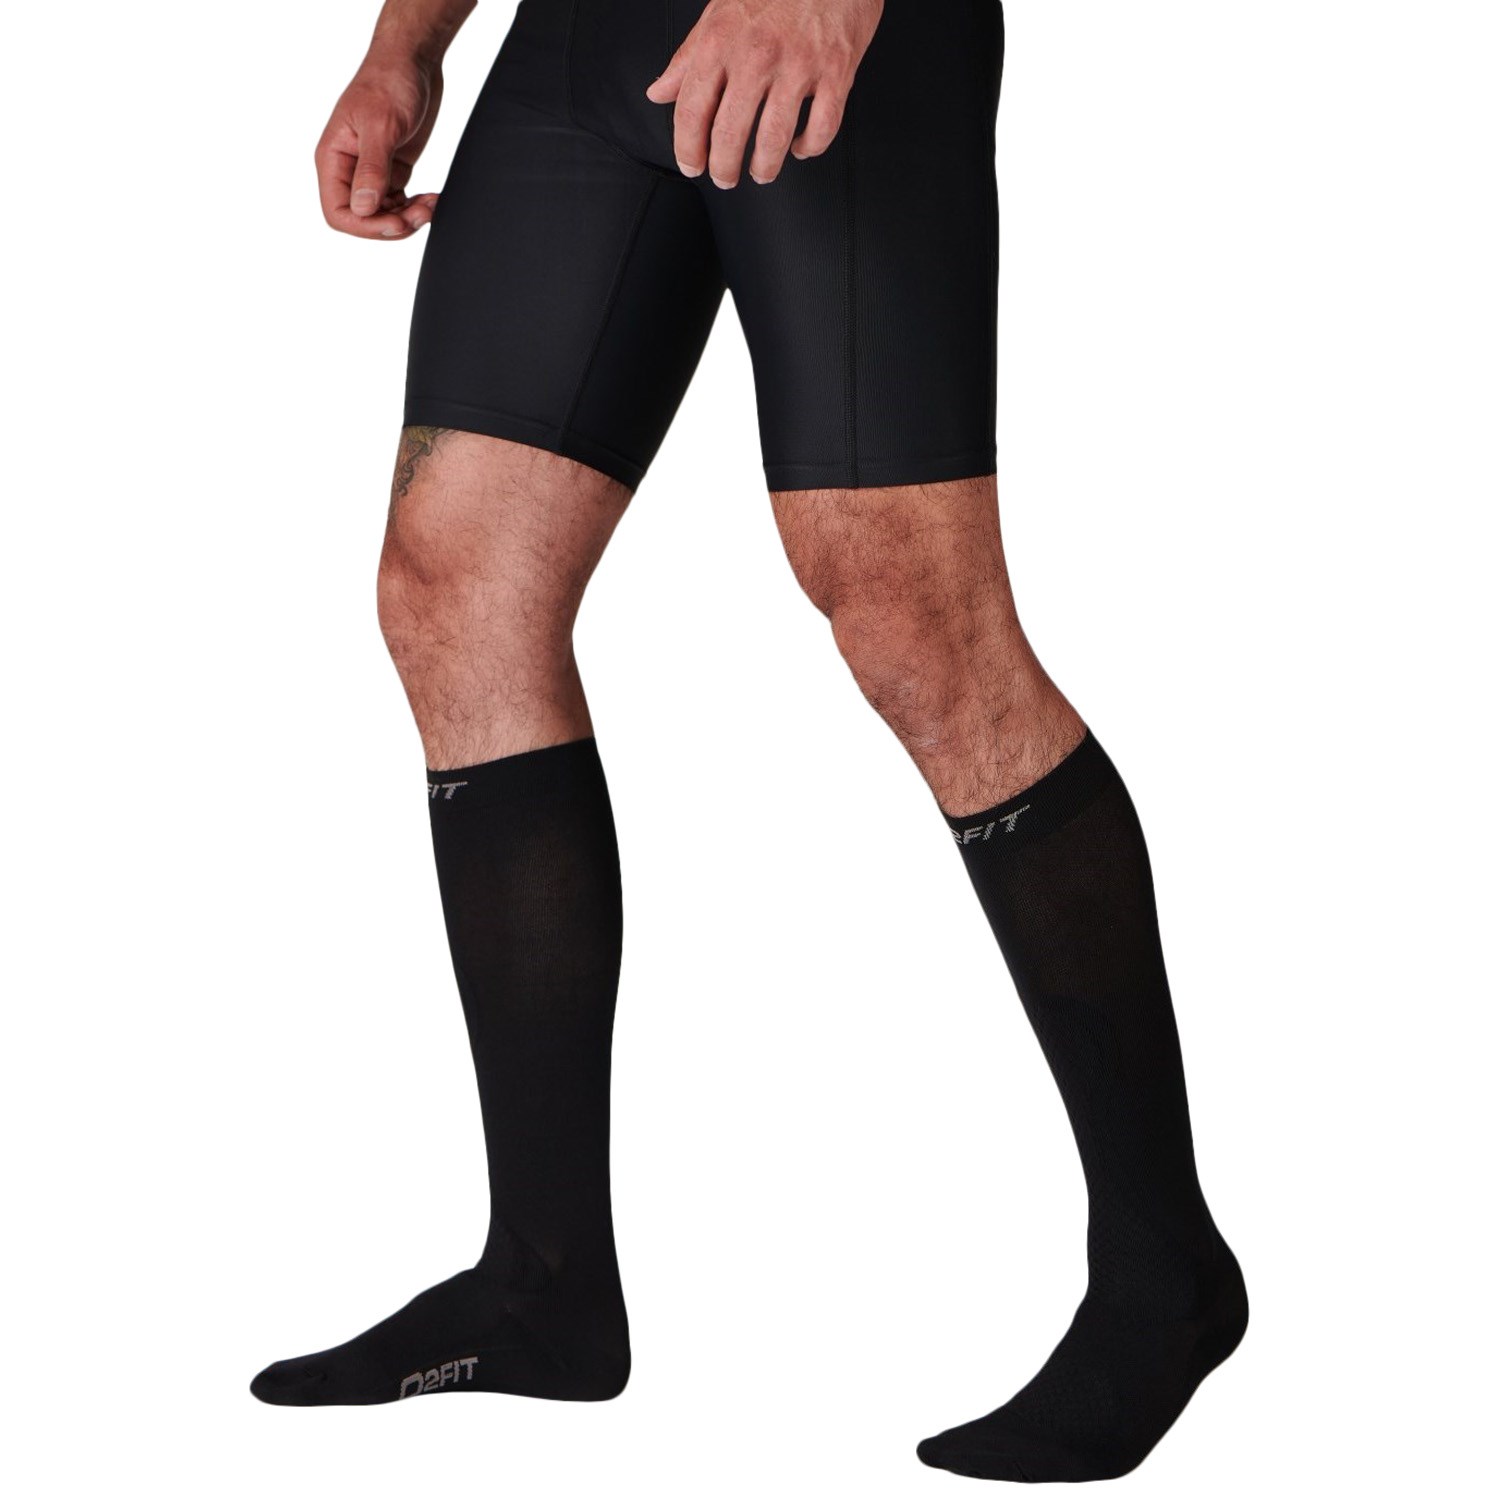 o2fit Unisex Compression Recovery Calf Socks - Black | Sportitude